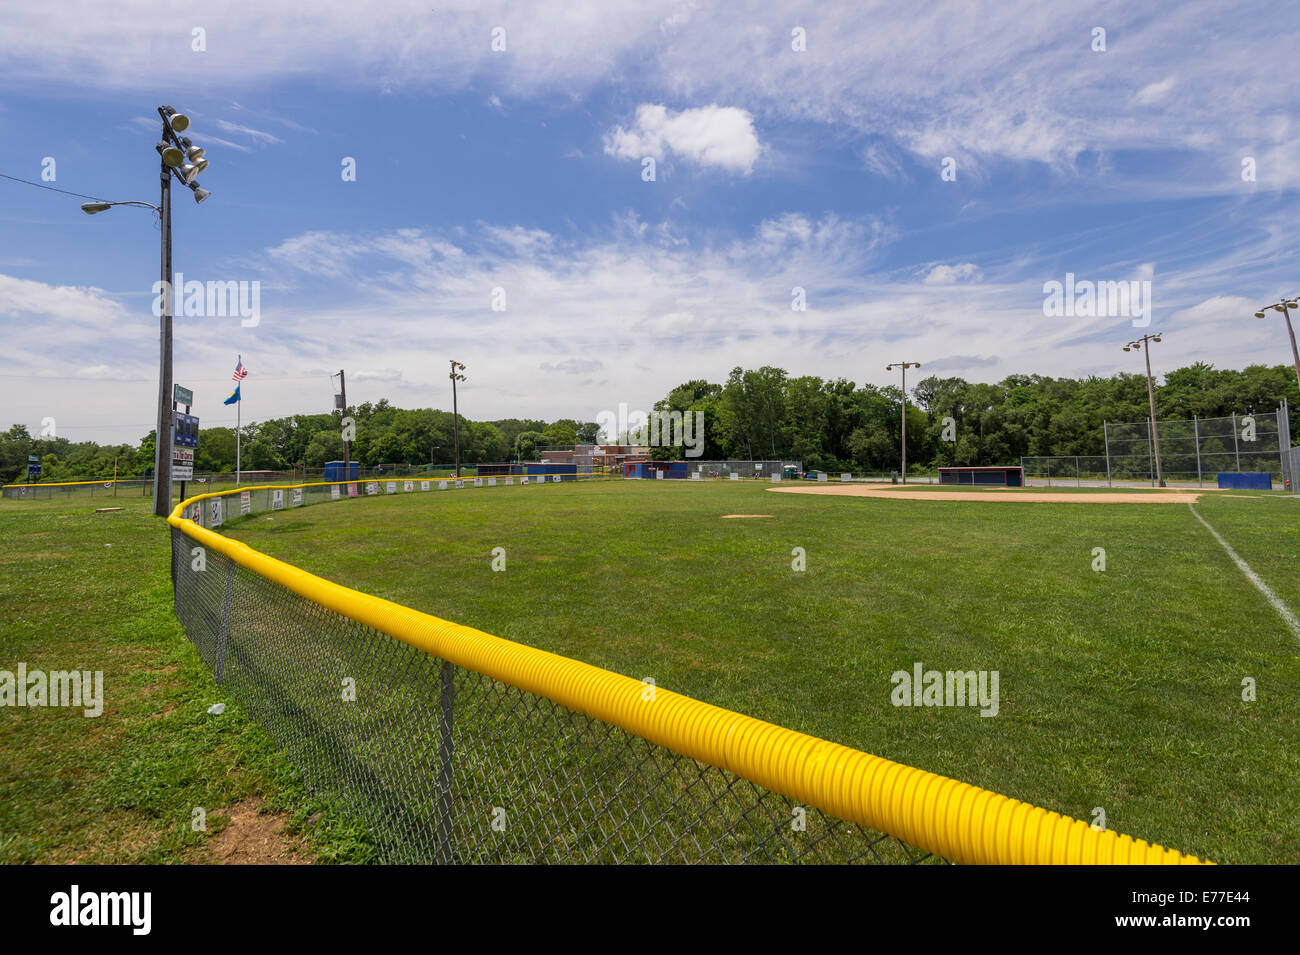 Outfield Fence, Little League Baseball Field Stock Photo